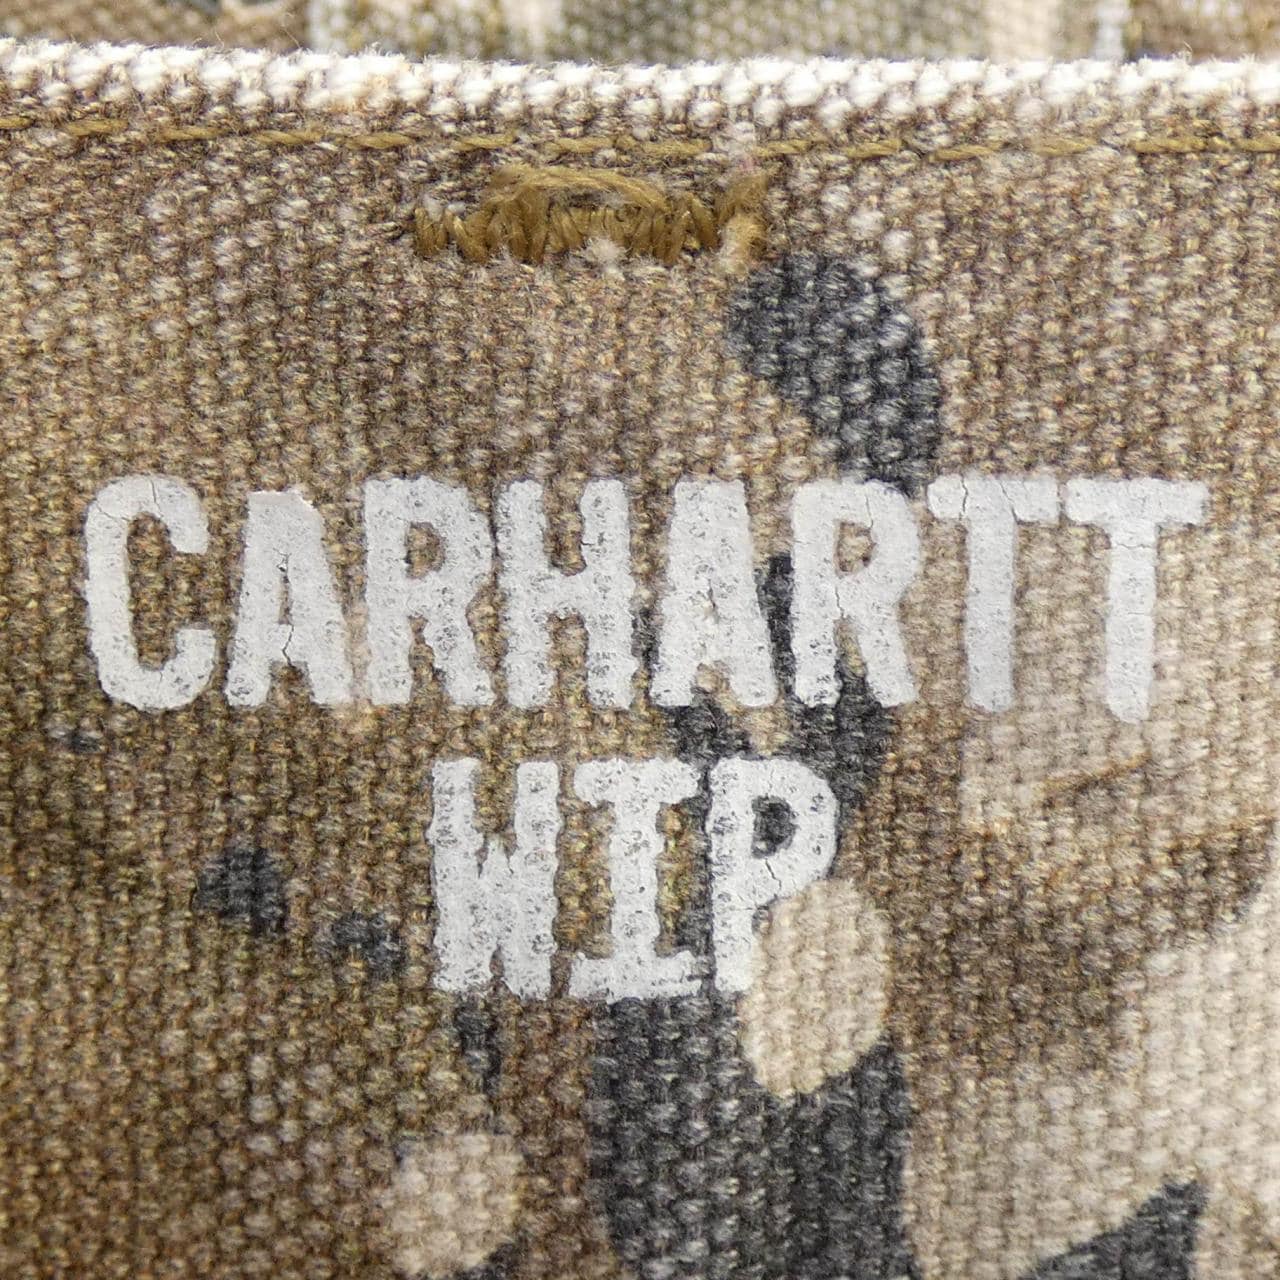 卡哈特CARHARTT裤